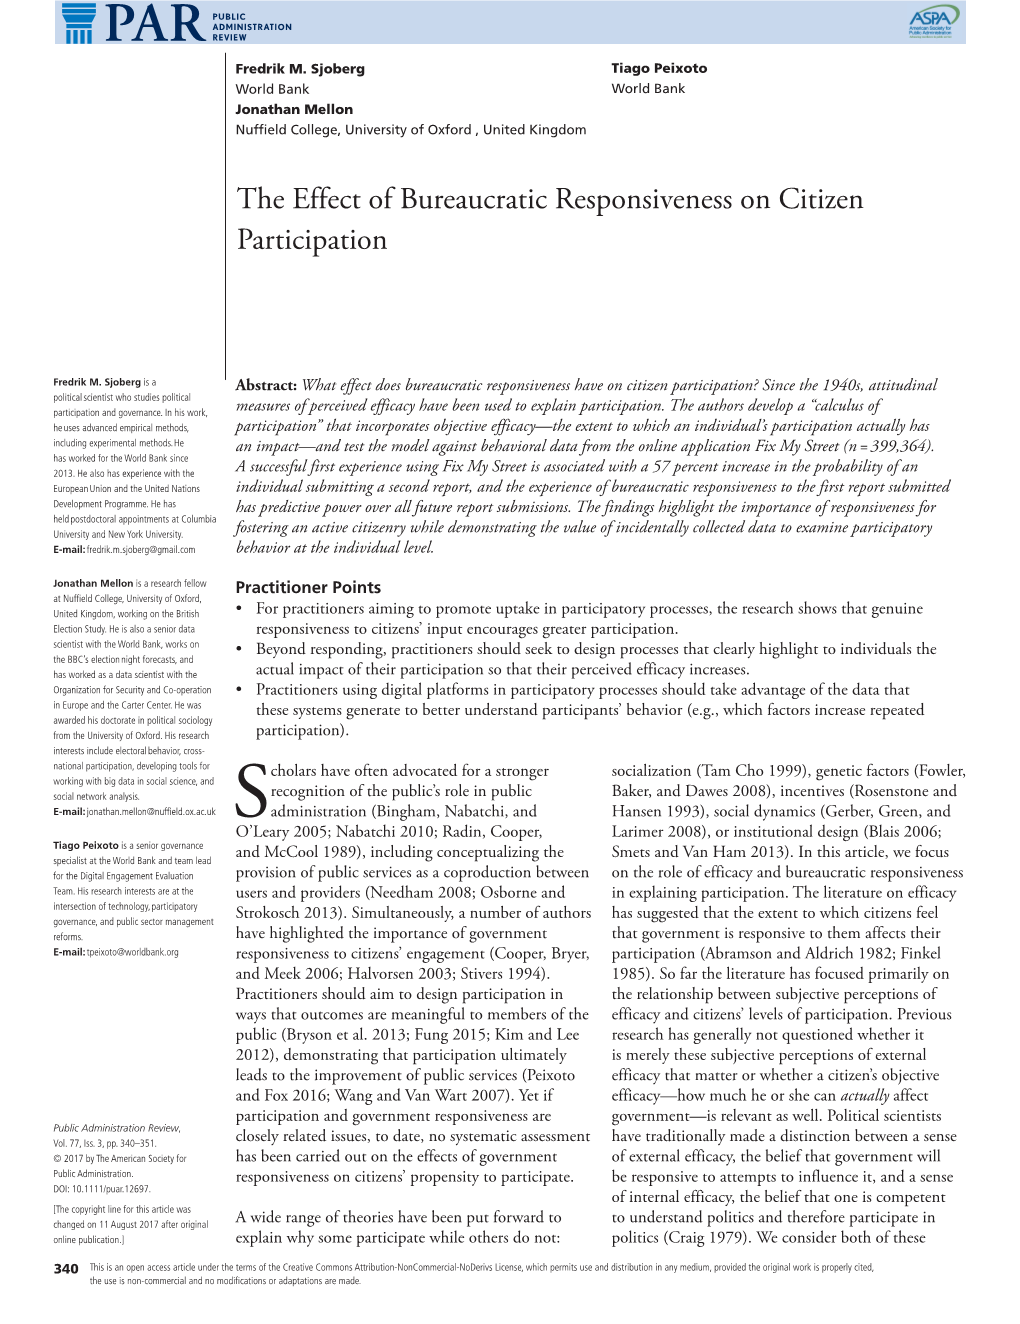 The Effect of Bureaucratic Responsiveness on Citizen Participation